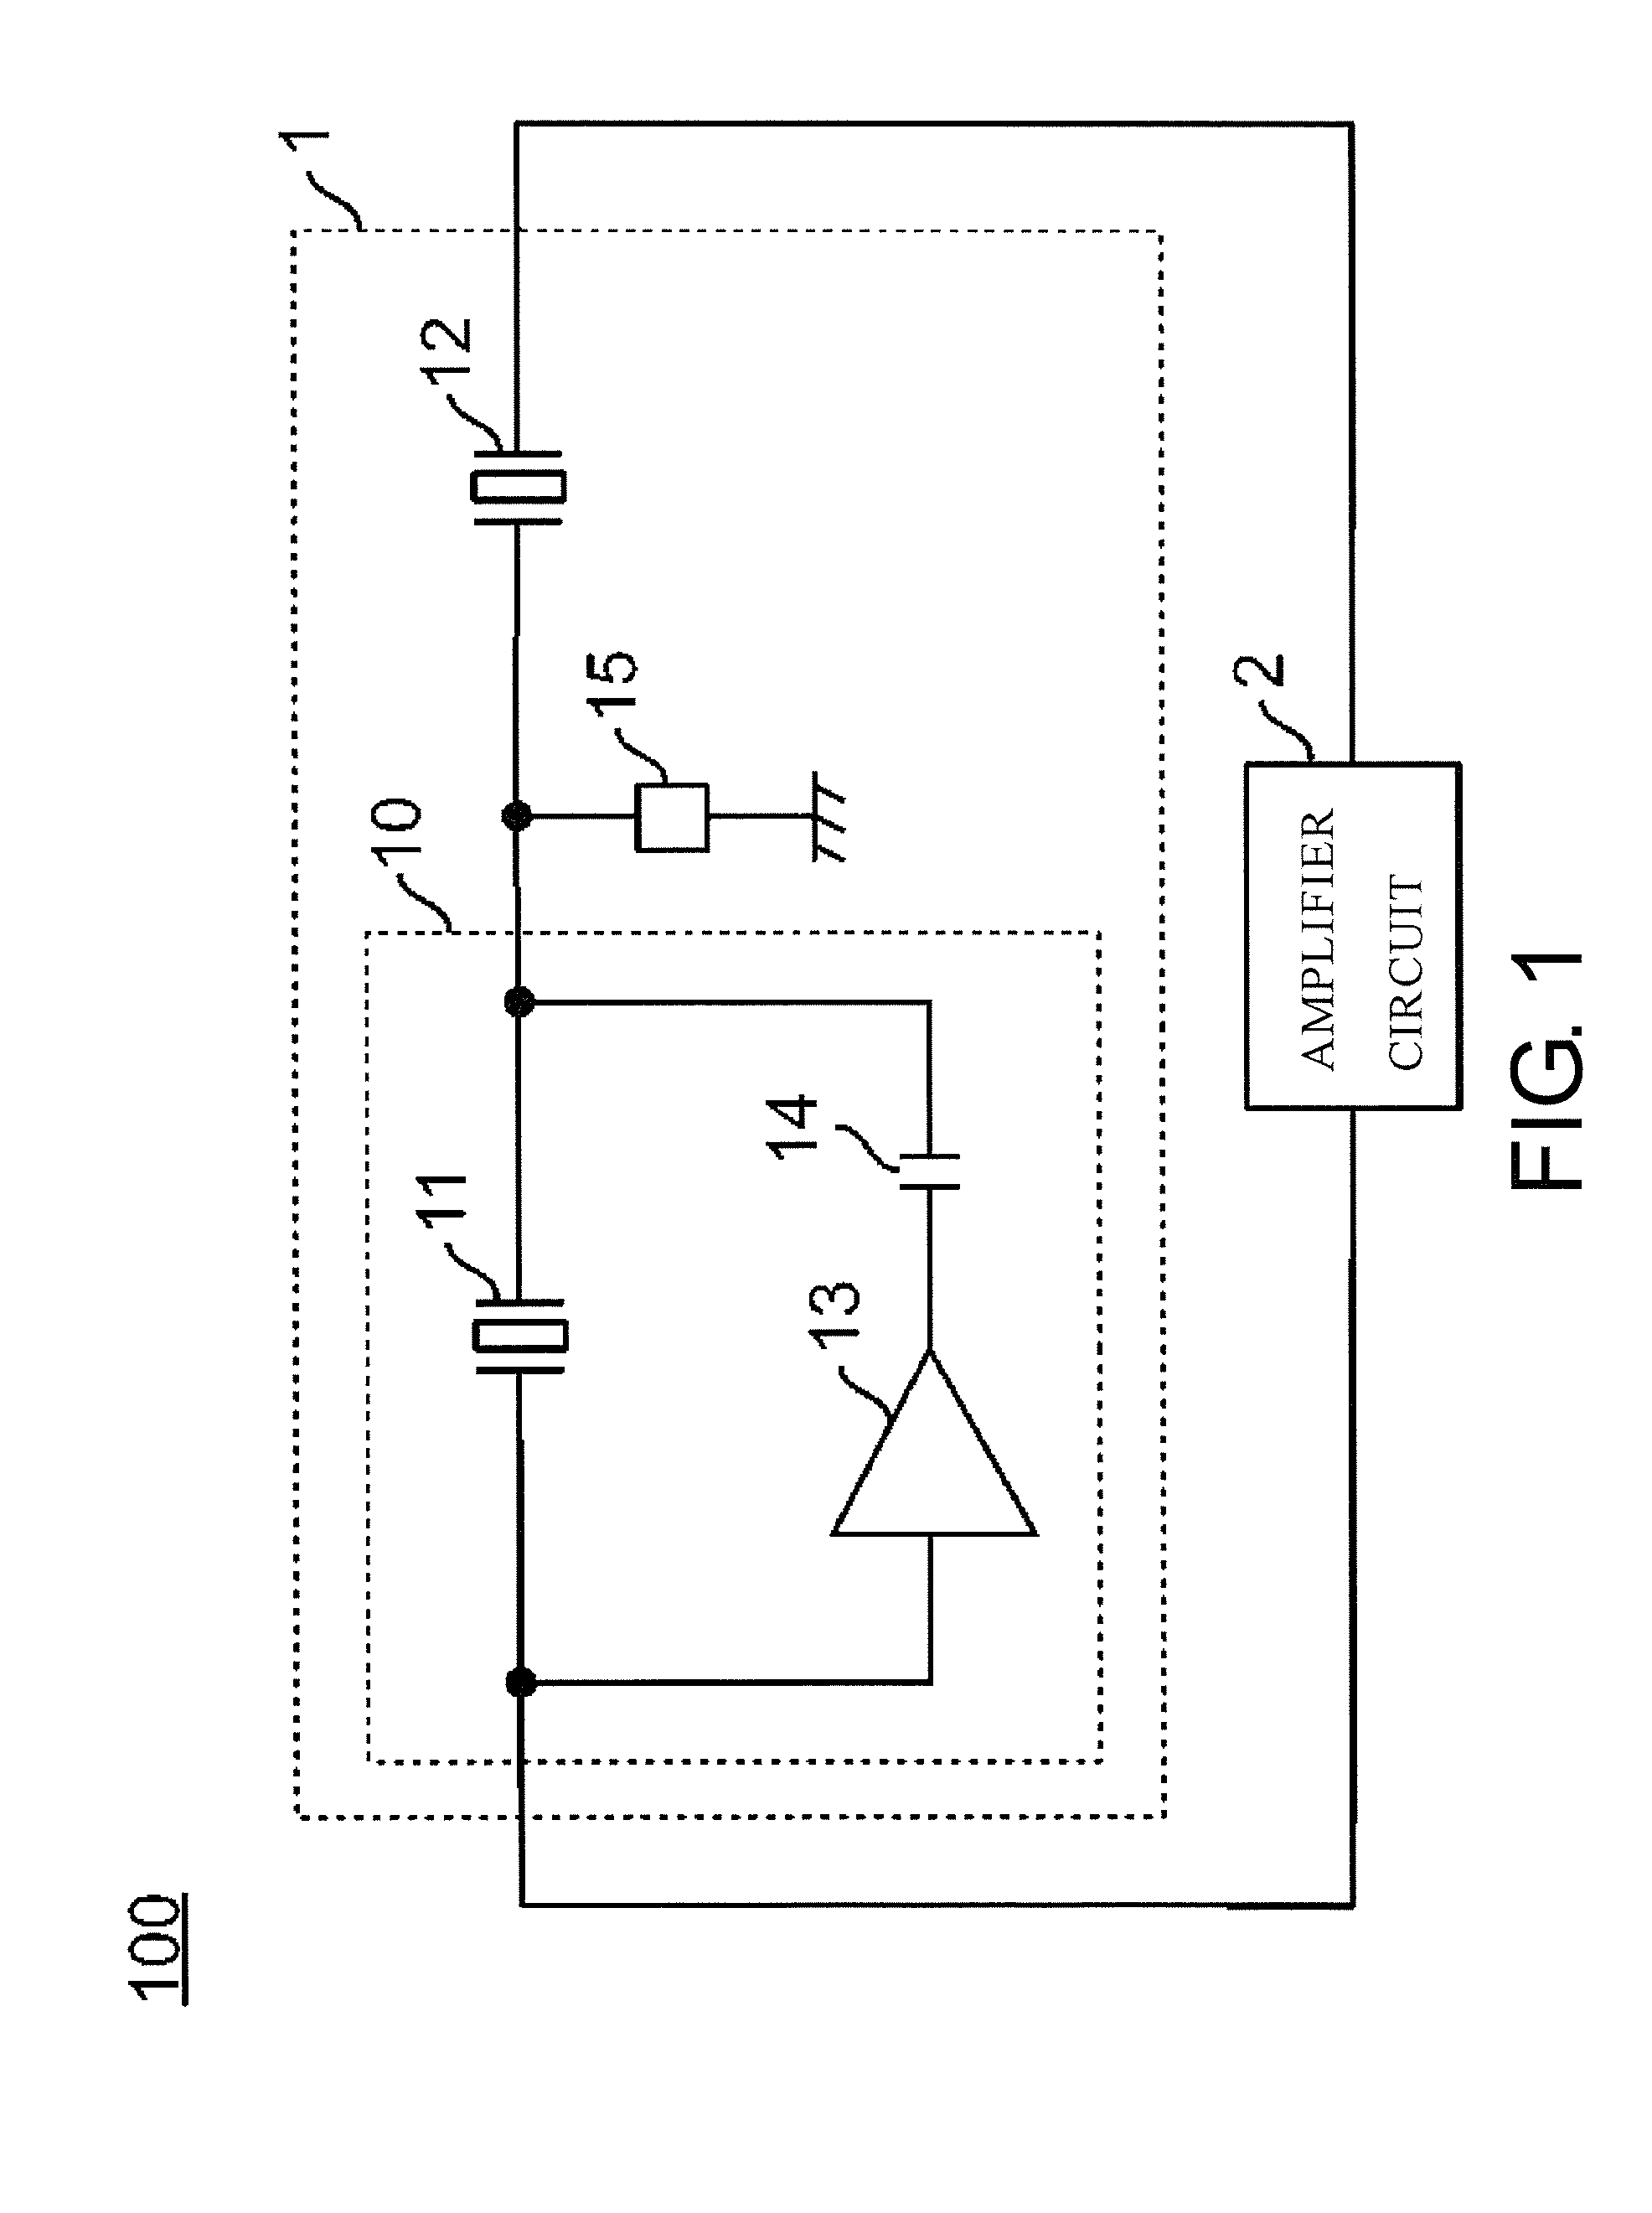 Negative capacitance circuit, resonance circuit and oscillator circuit